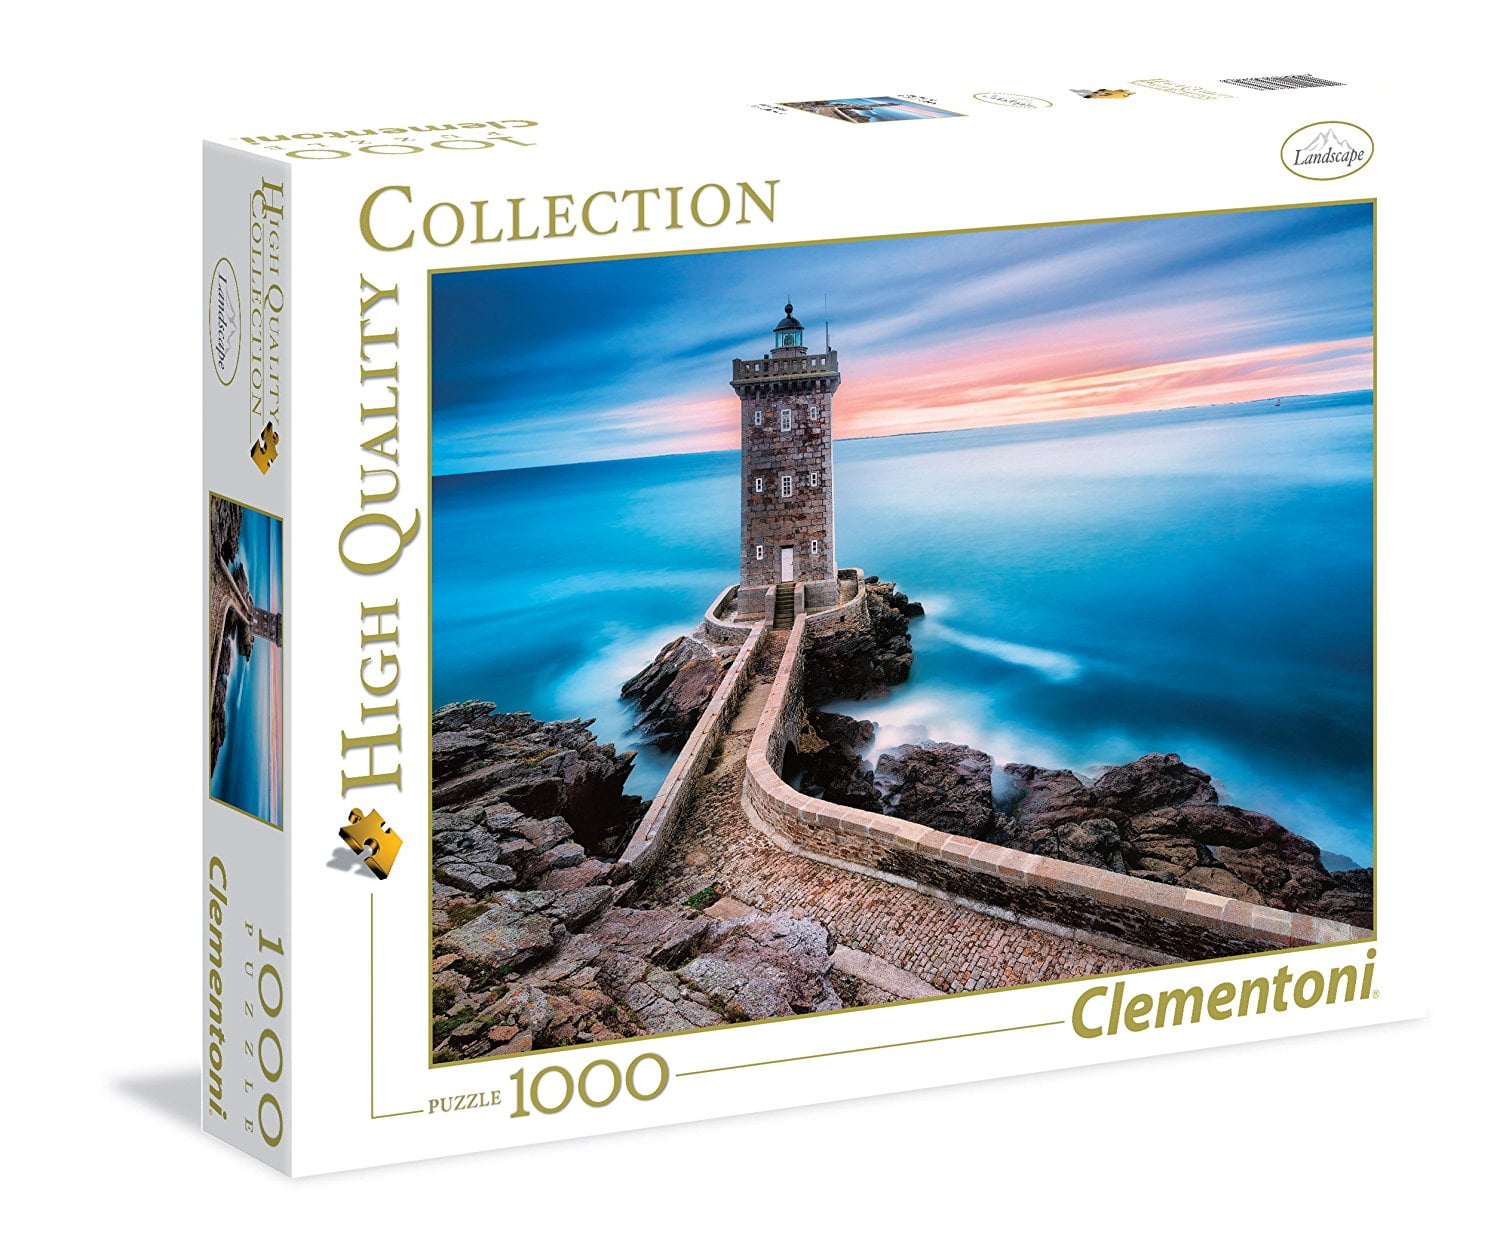 The Lighthouse 1000 Piece Clementoni Puzzle